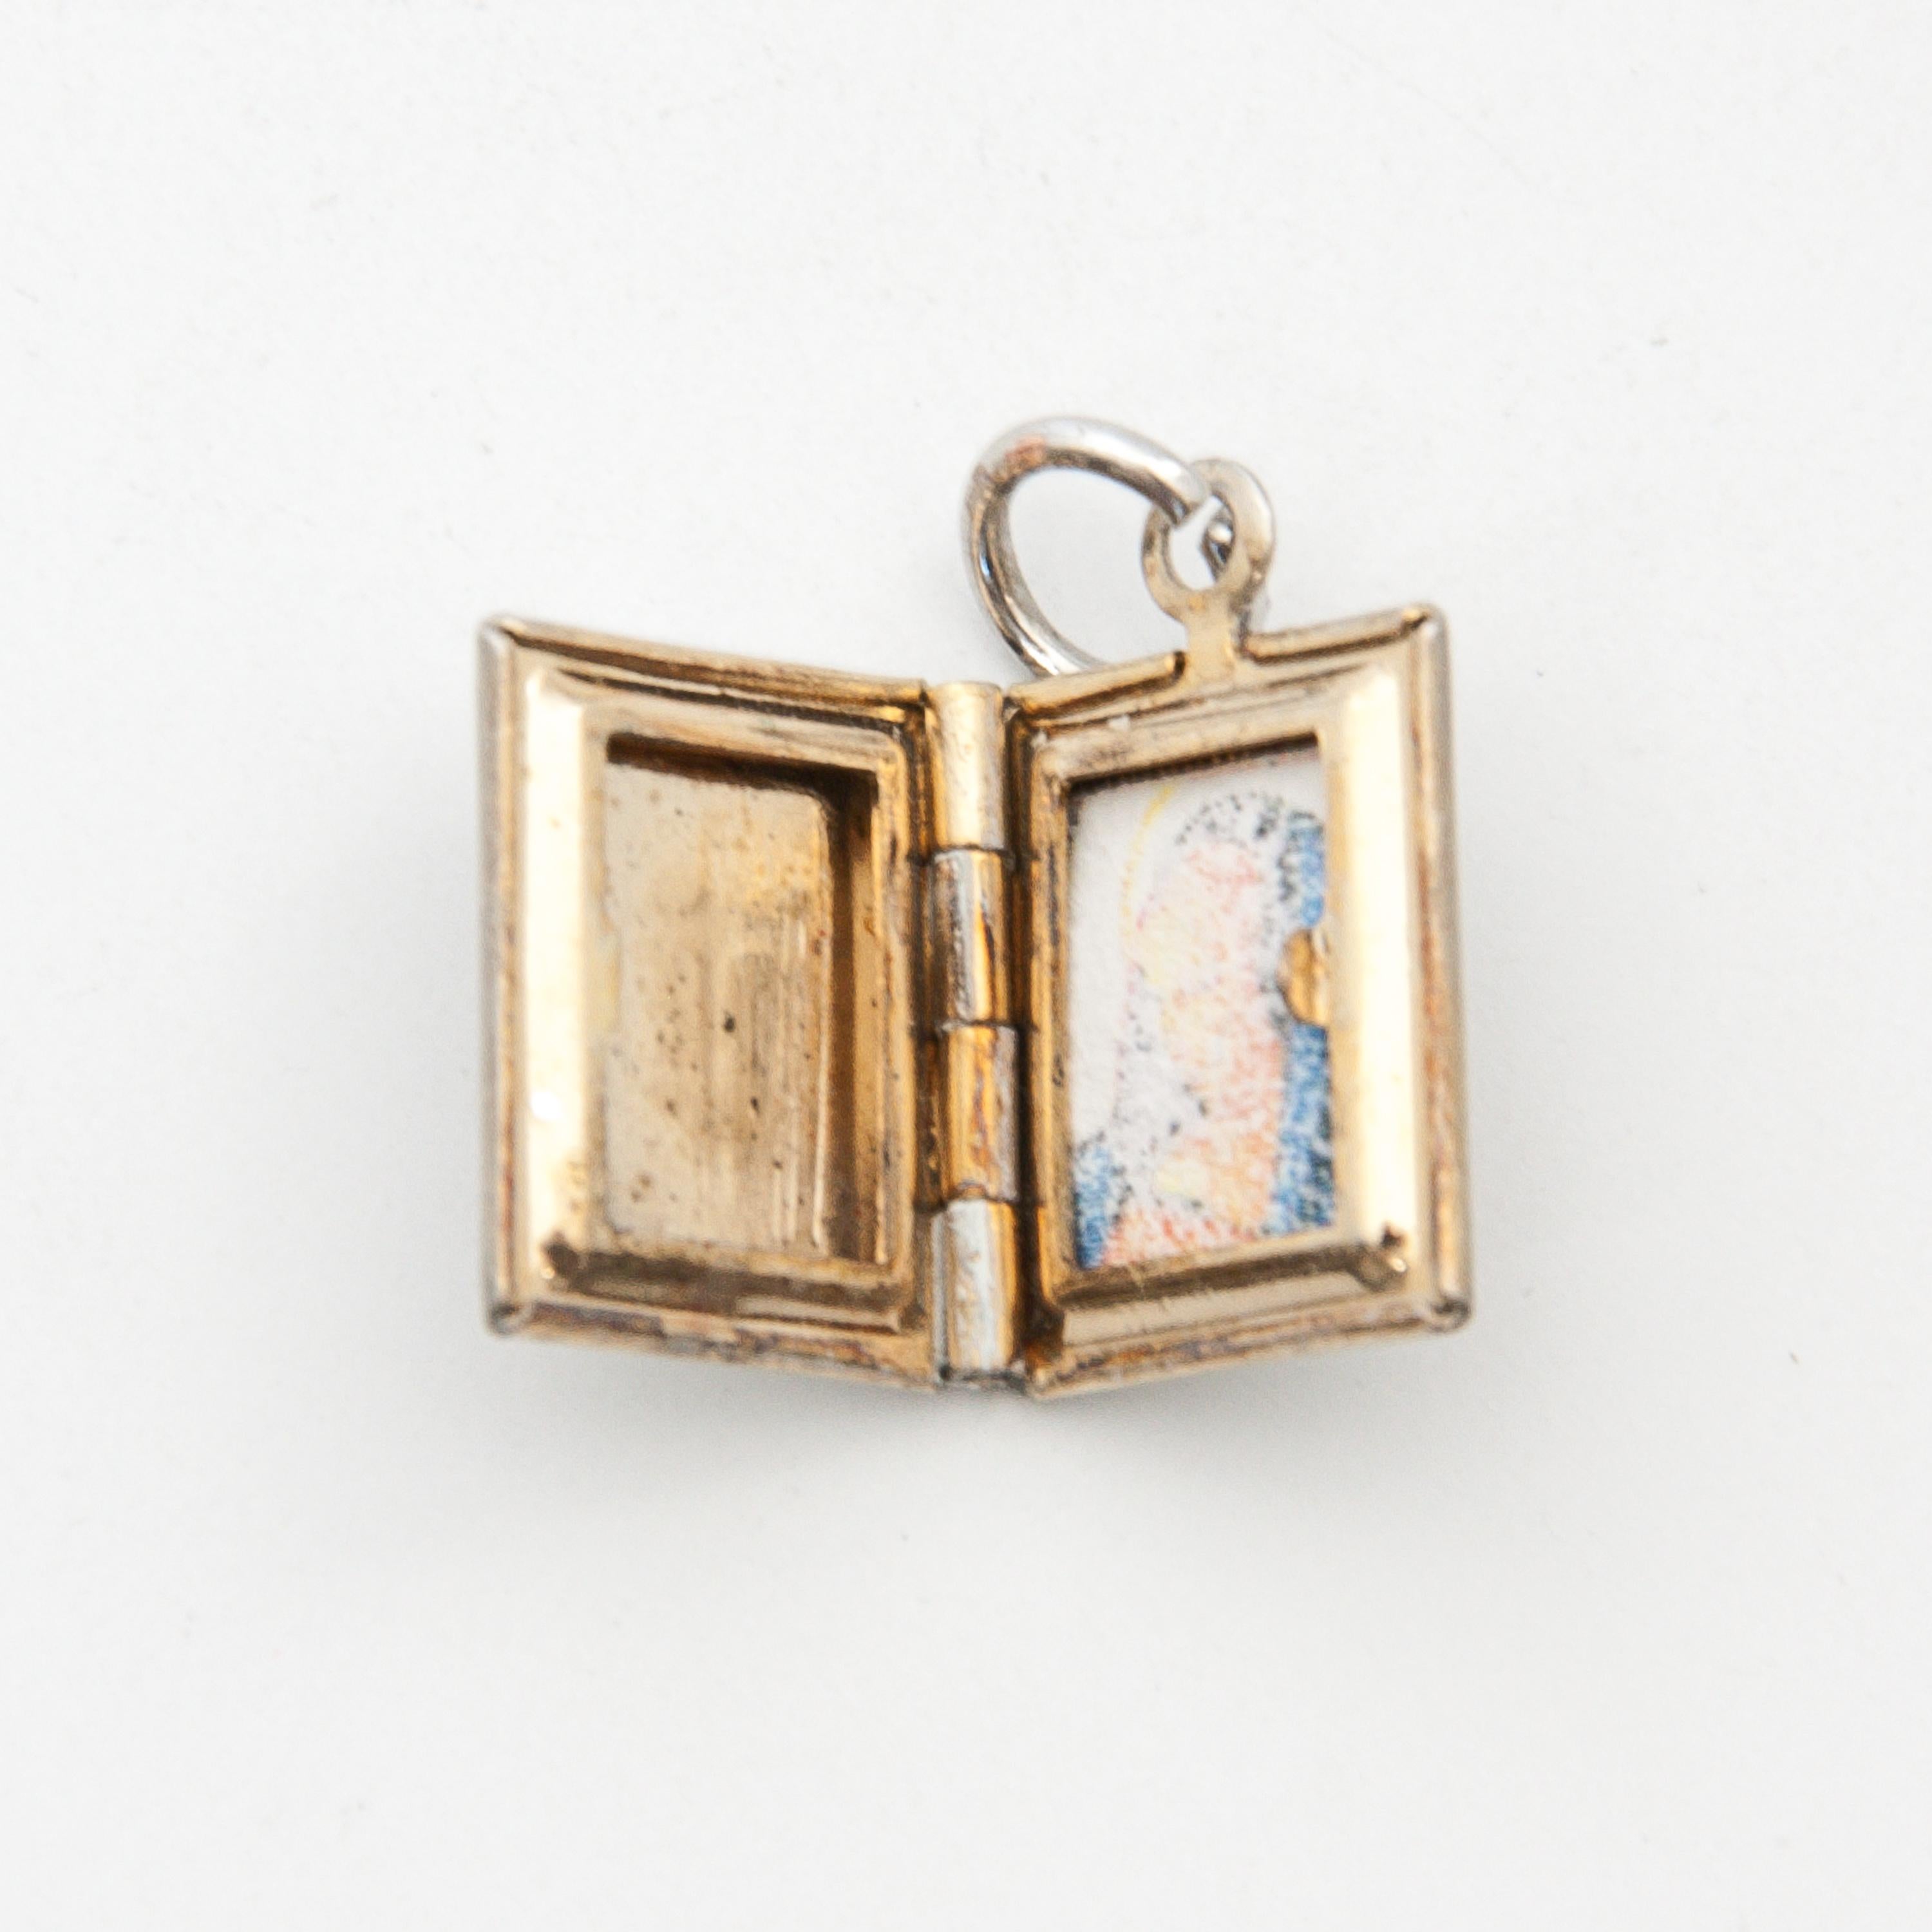 Vintage Religious Miniature Book Locket Charm Pendant 5